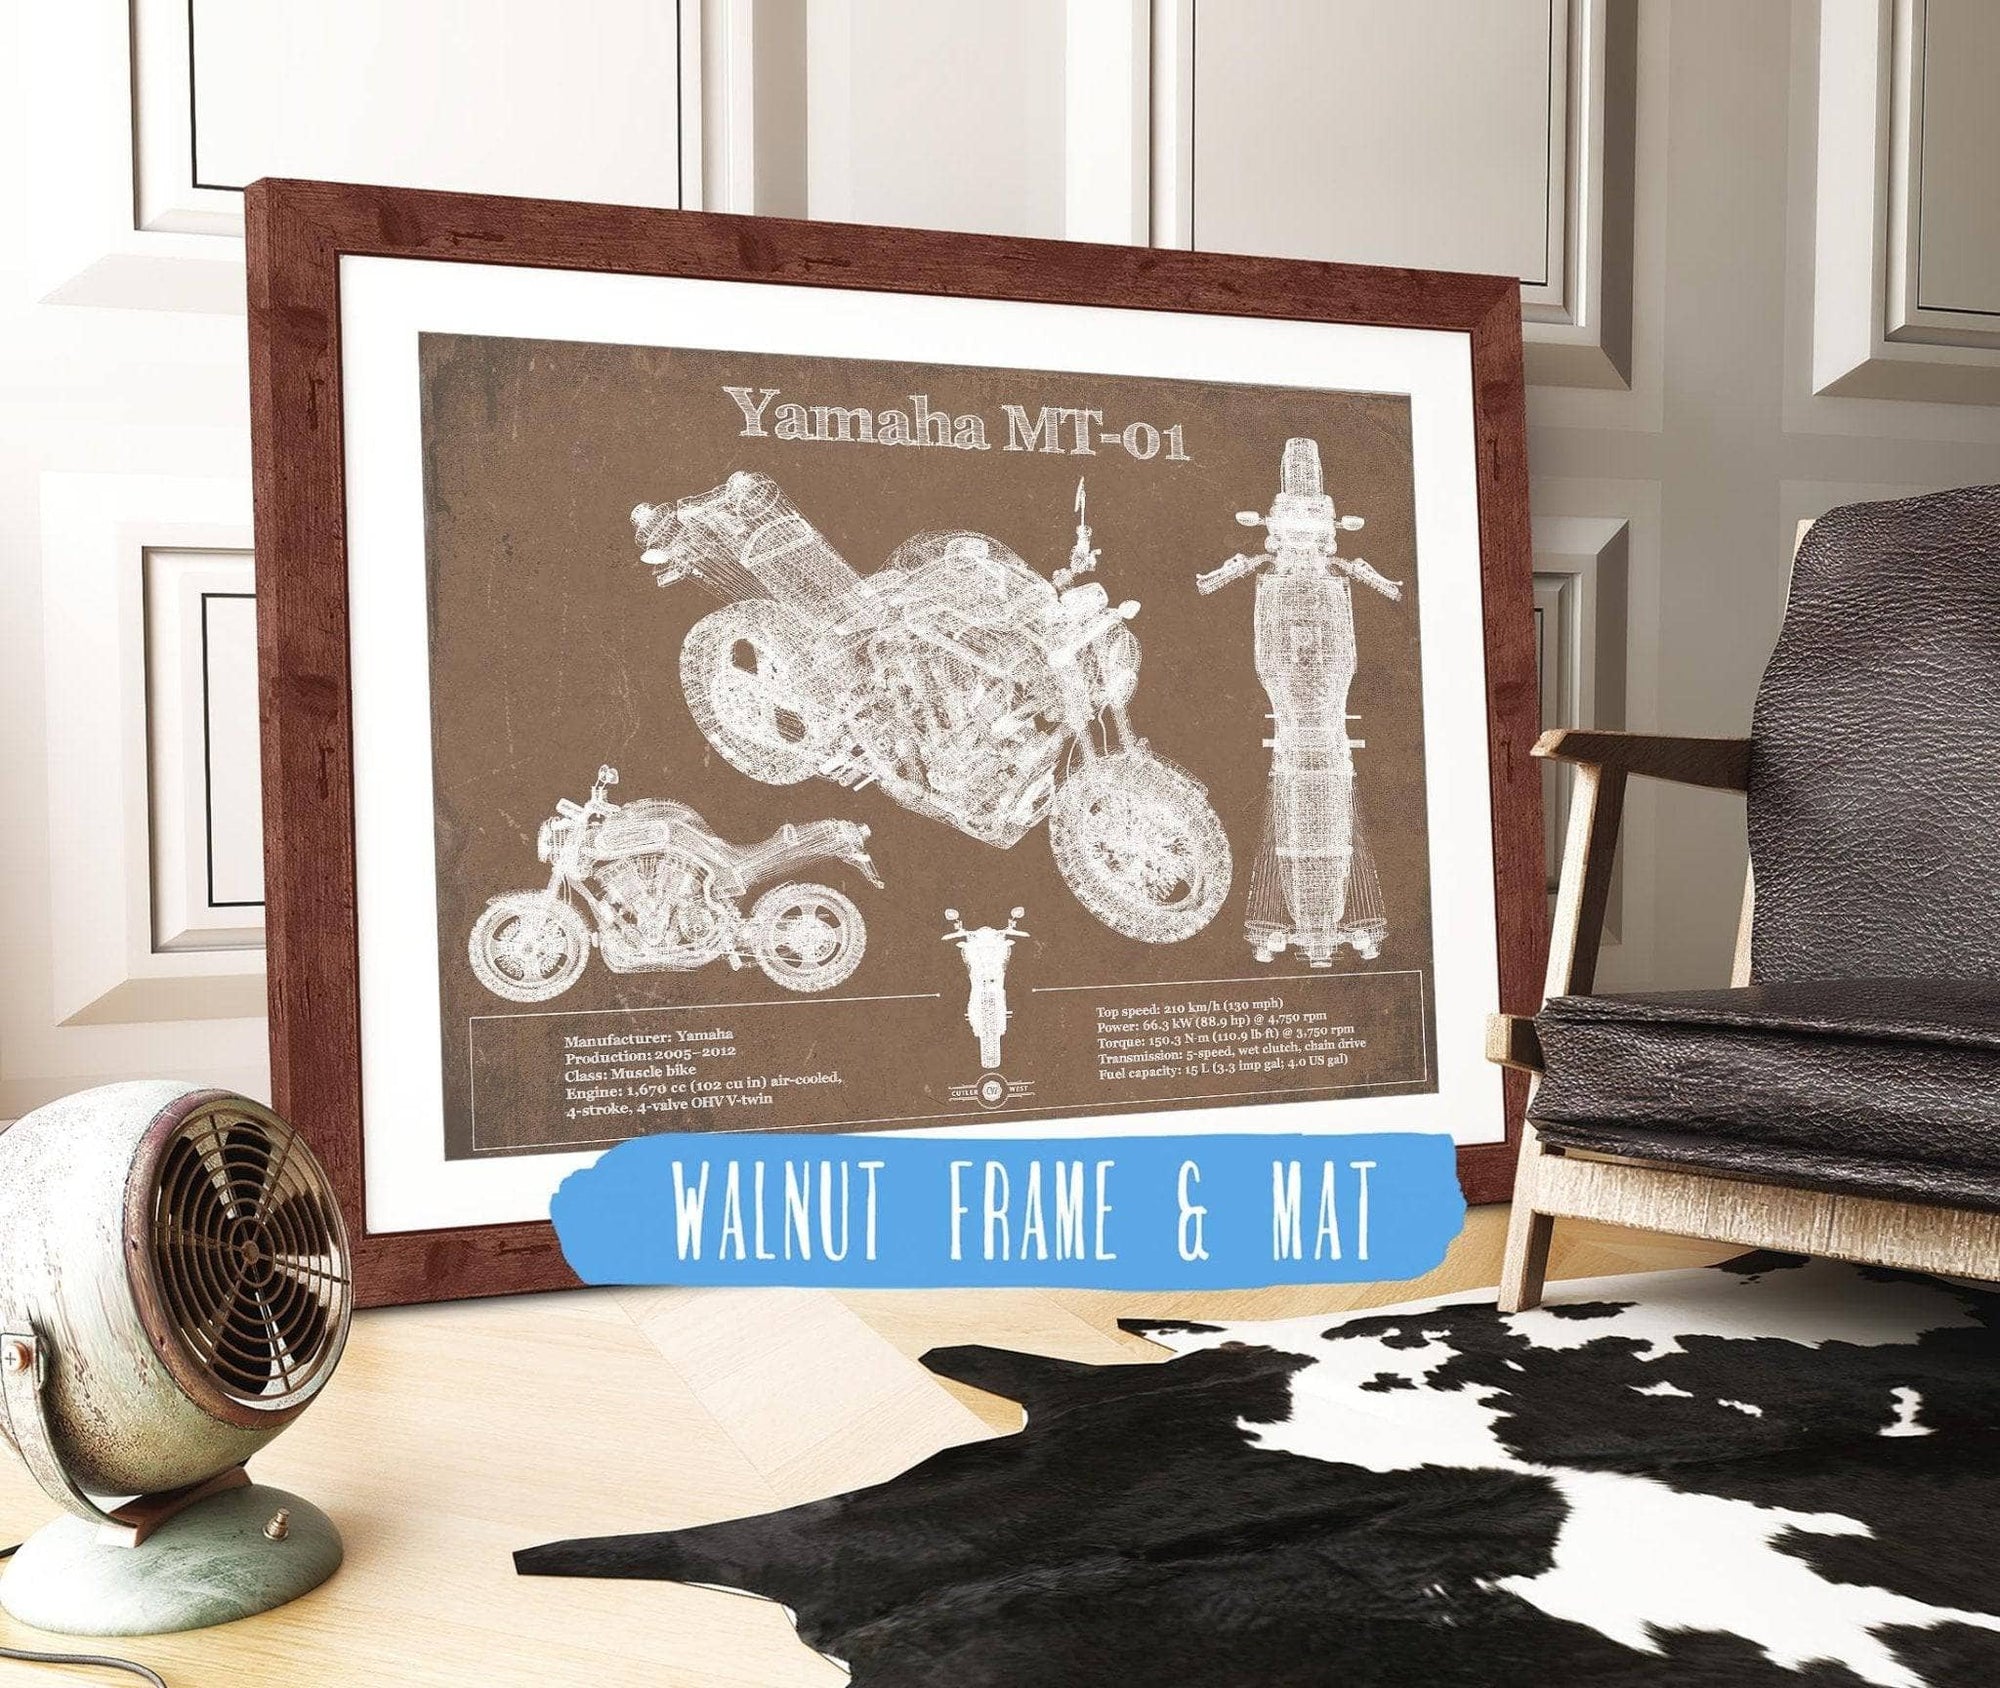 Cutler West 14" x 11" / Walnut Frame & Mat Yamaha MT-01 Blueprint Motorcycle Patent Print 933350089-14"-x-11"5015